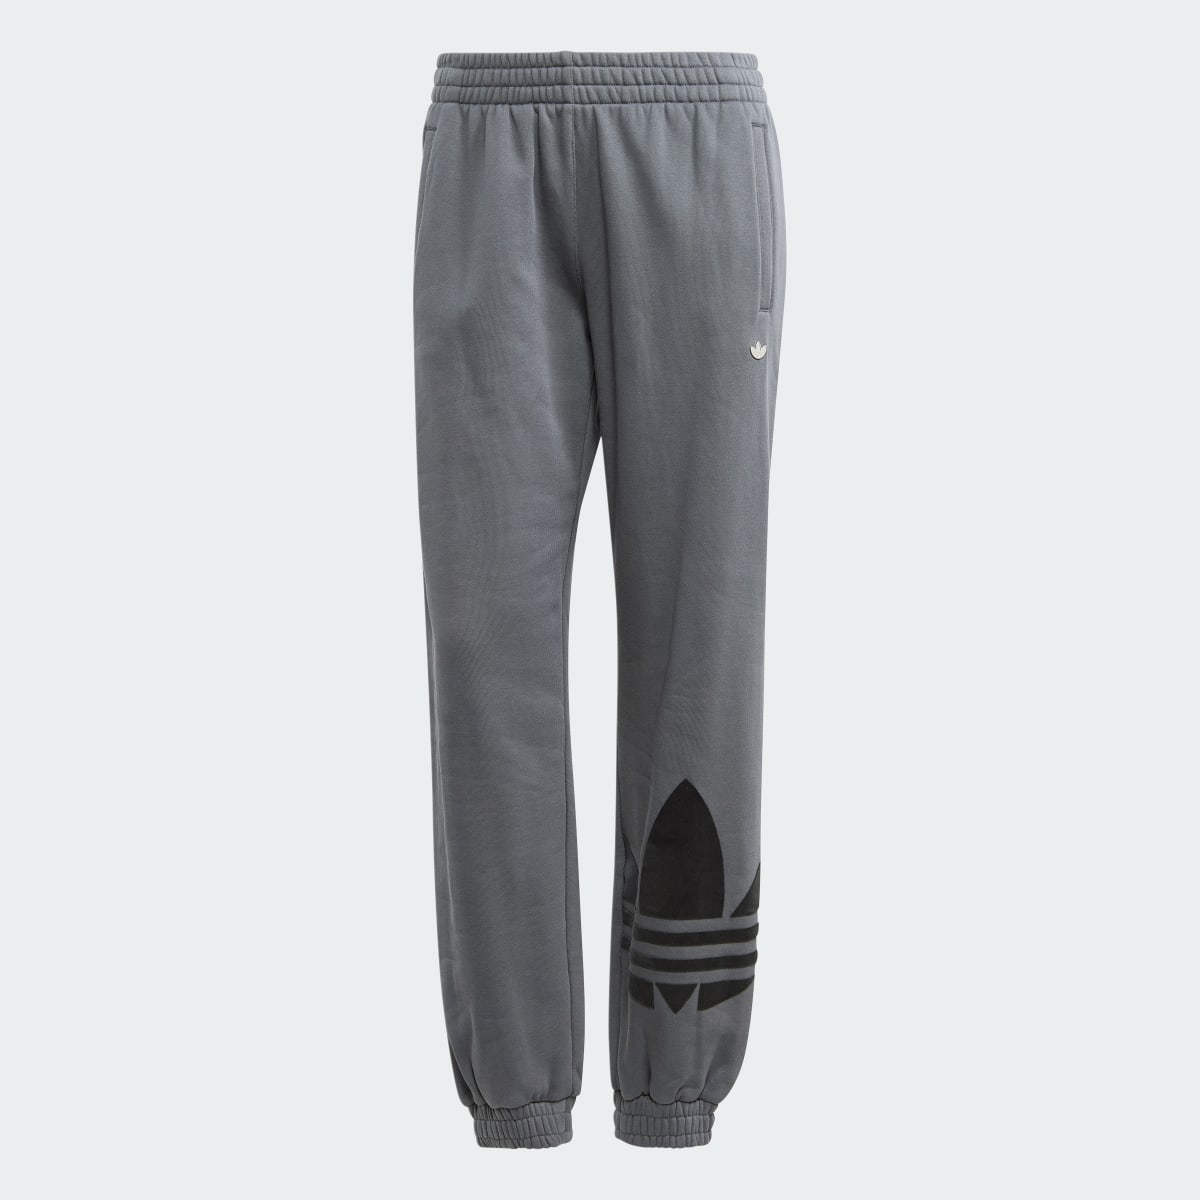 Adidas Large Trefoil Cuff Sweatpants. 4